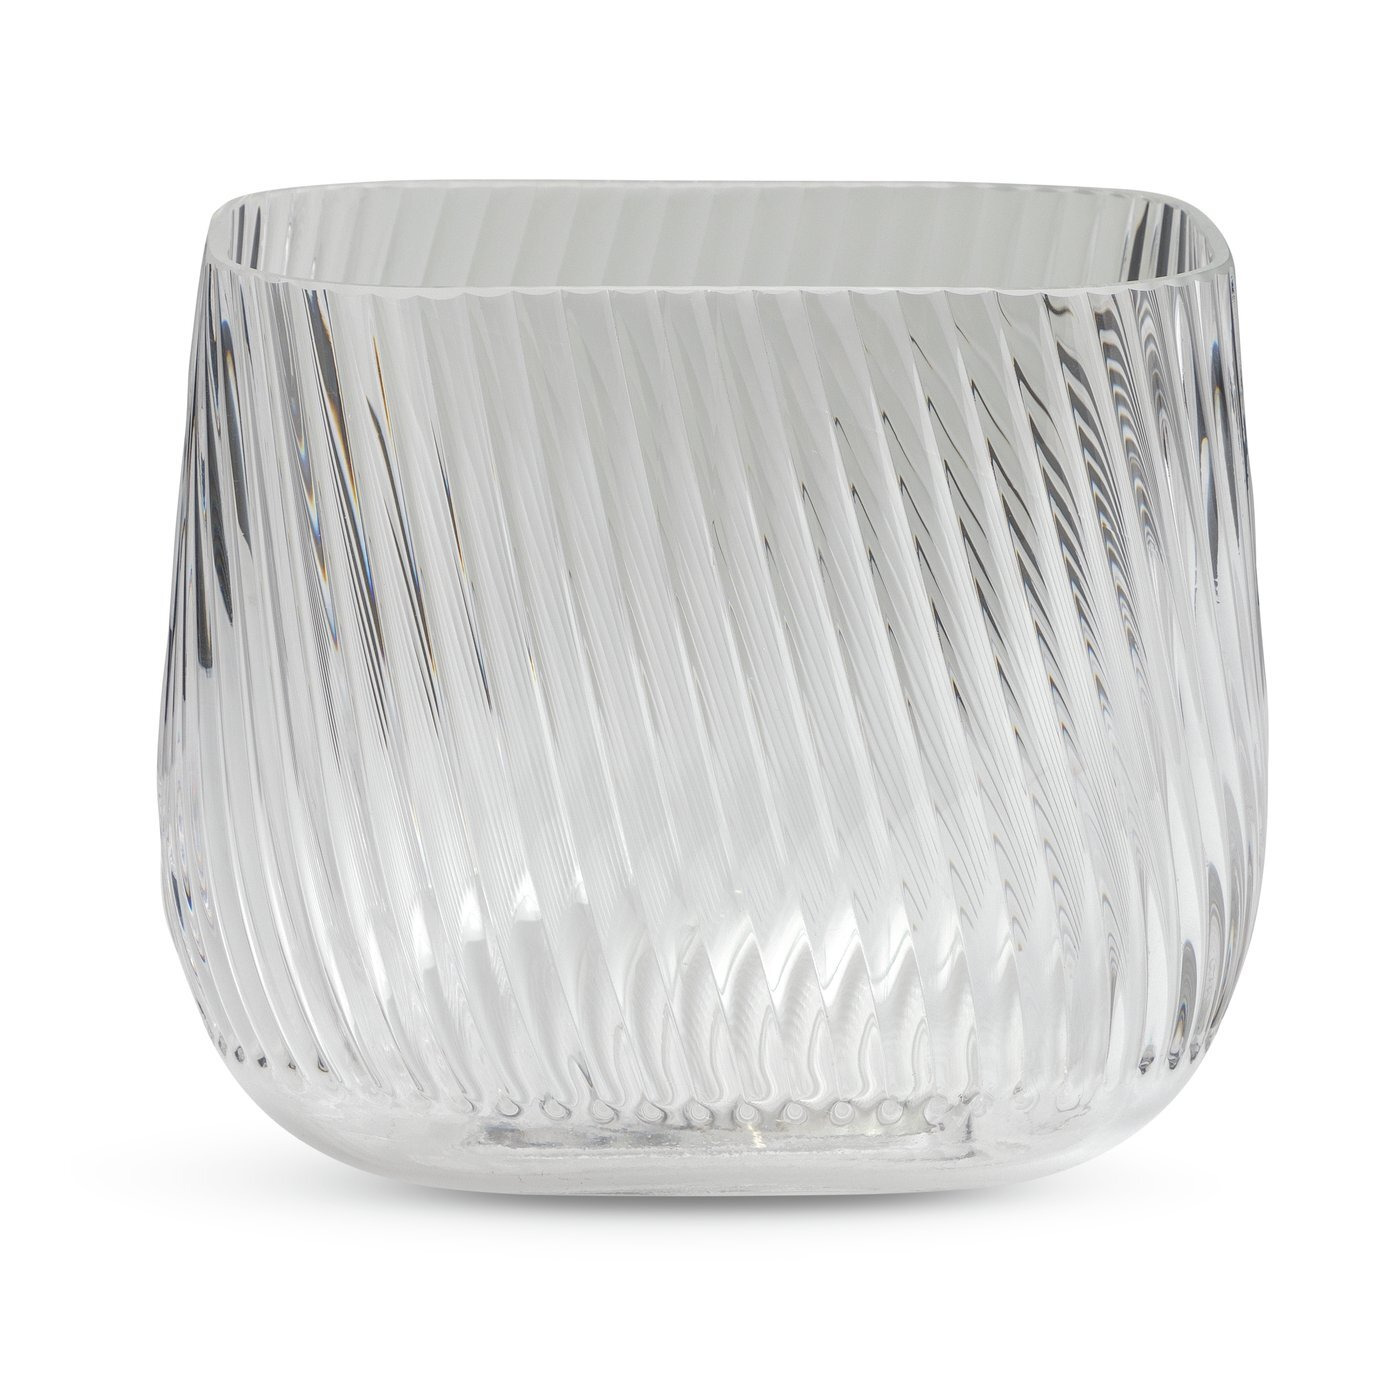 Habitat Small Ribbed Glass Vase - Clear - image 1